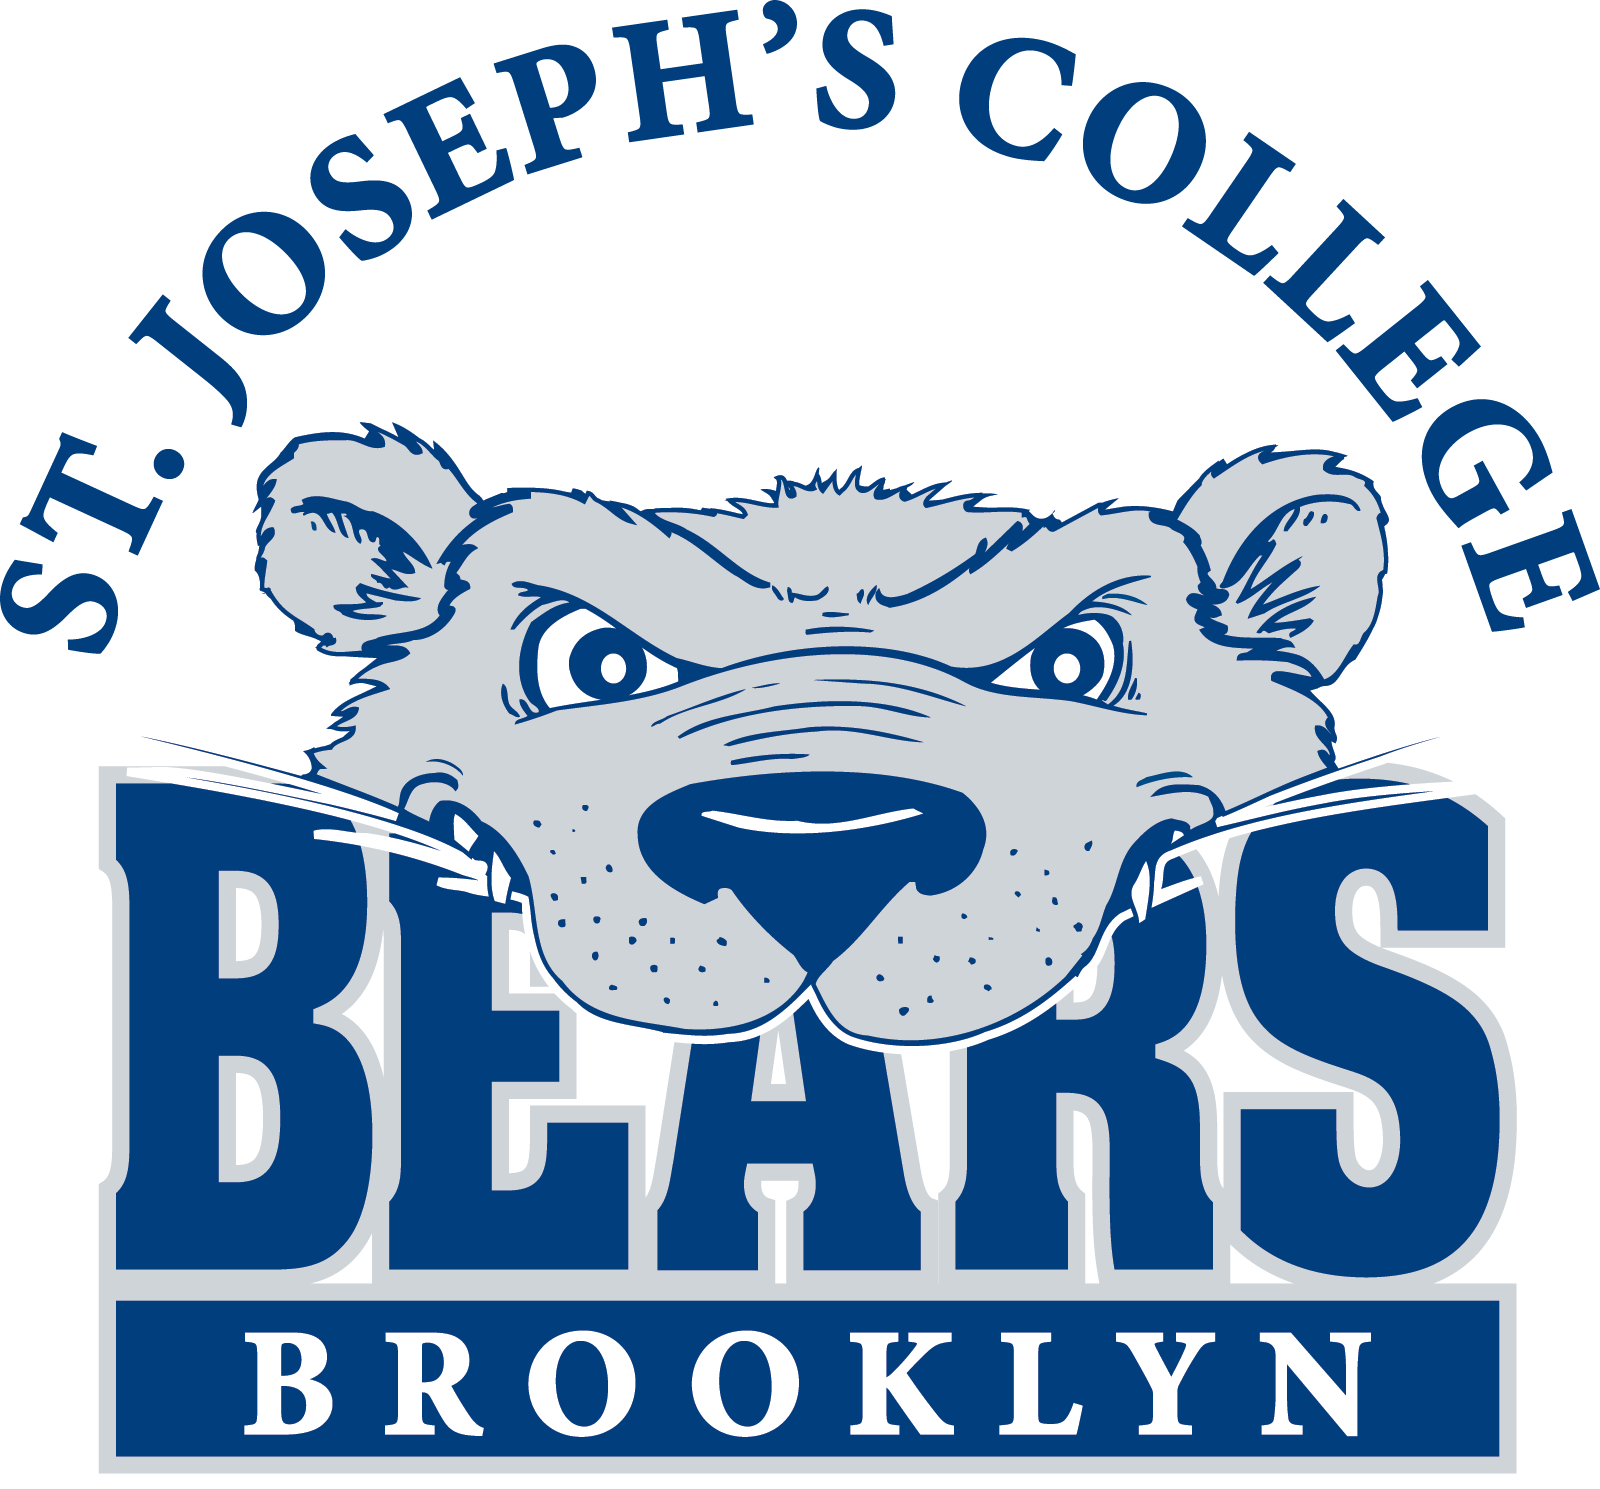 St. Joseph's (Brooklyn) logo